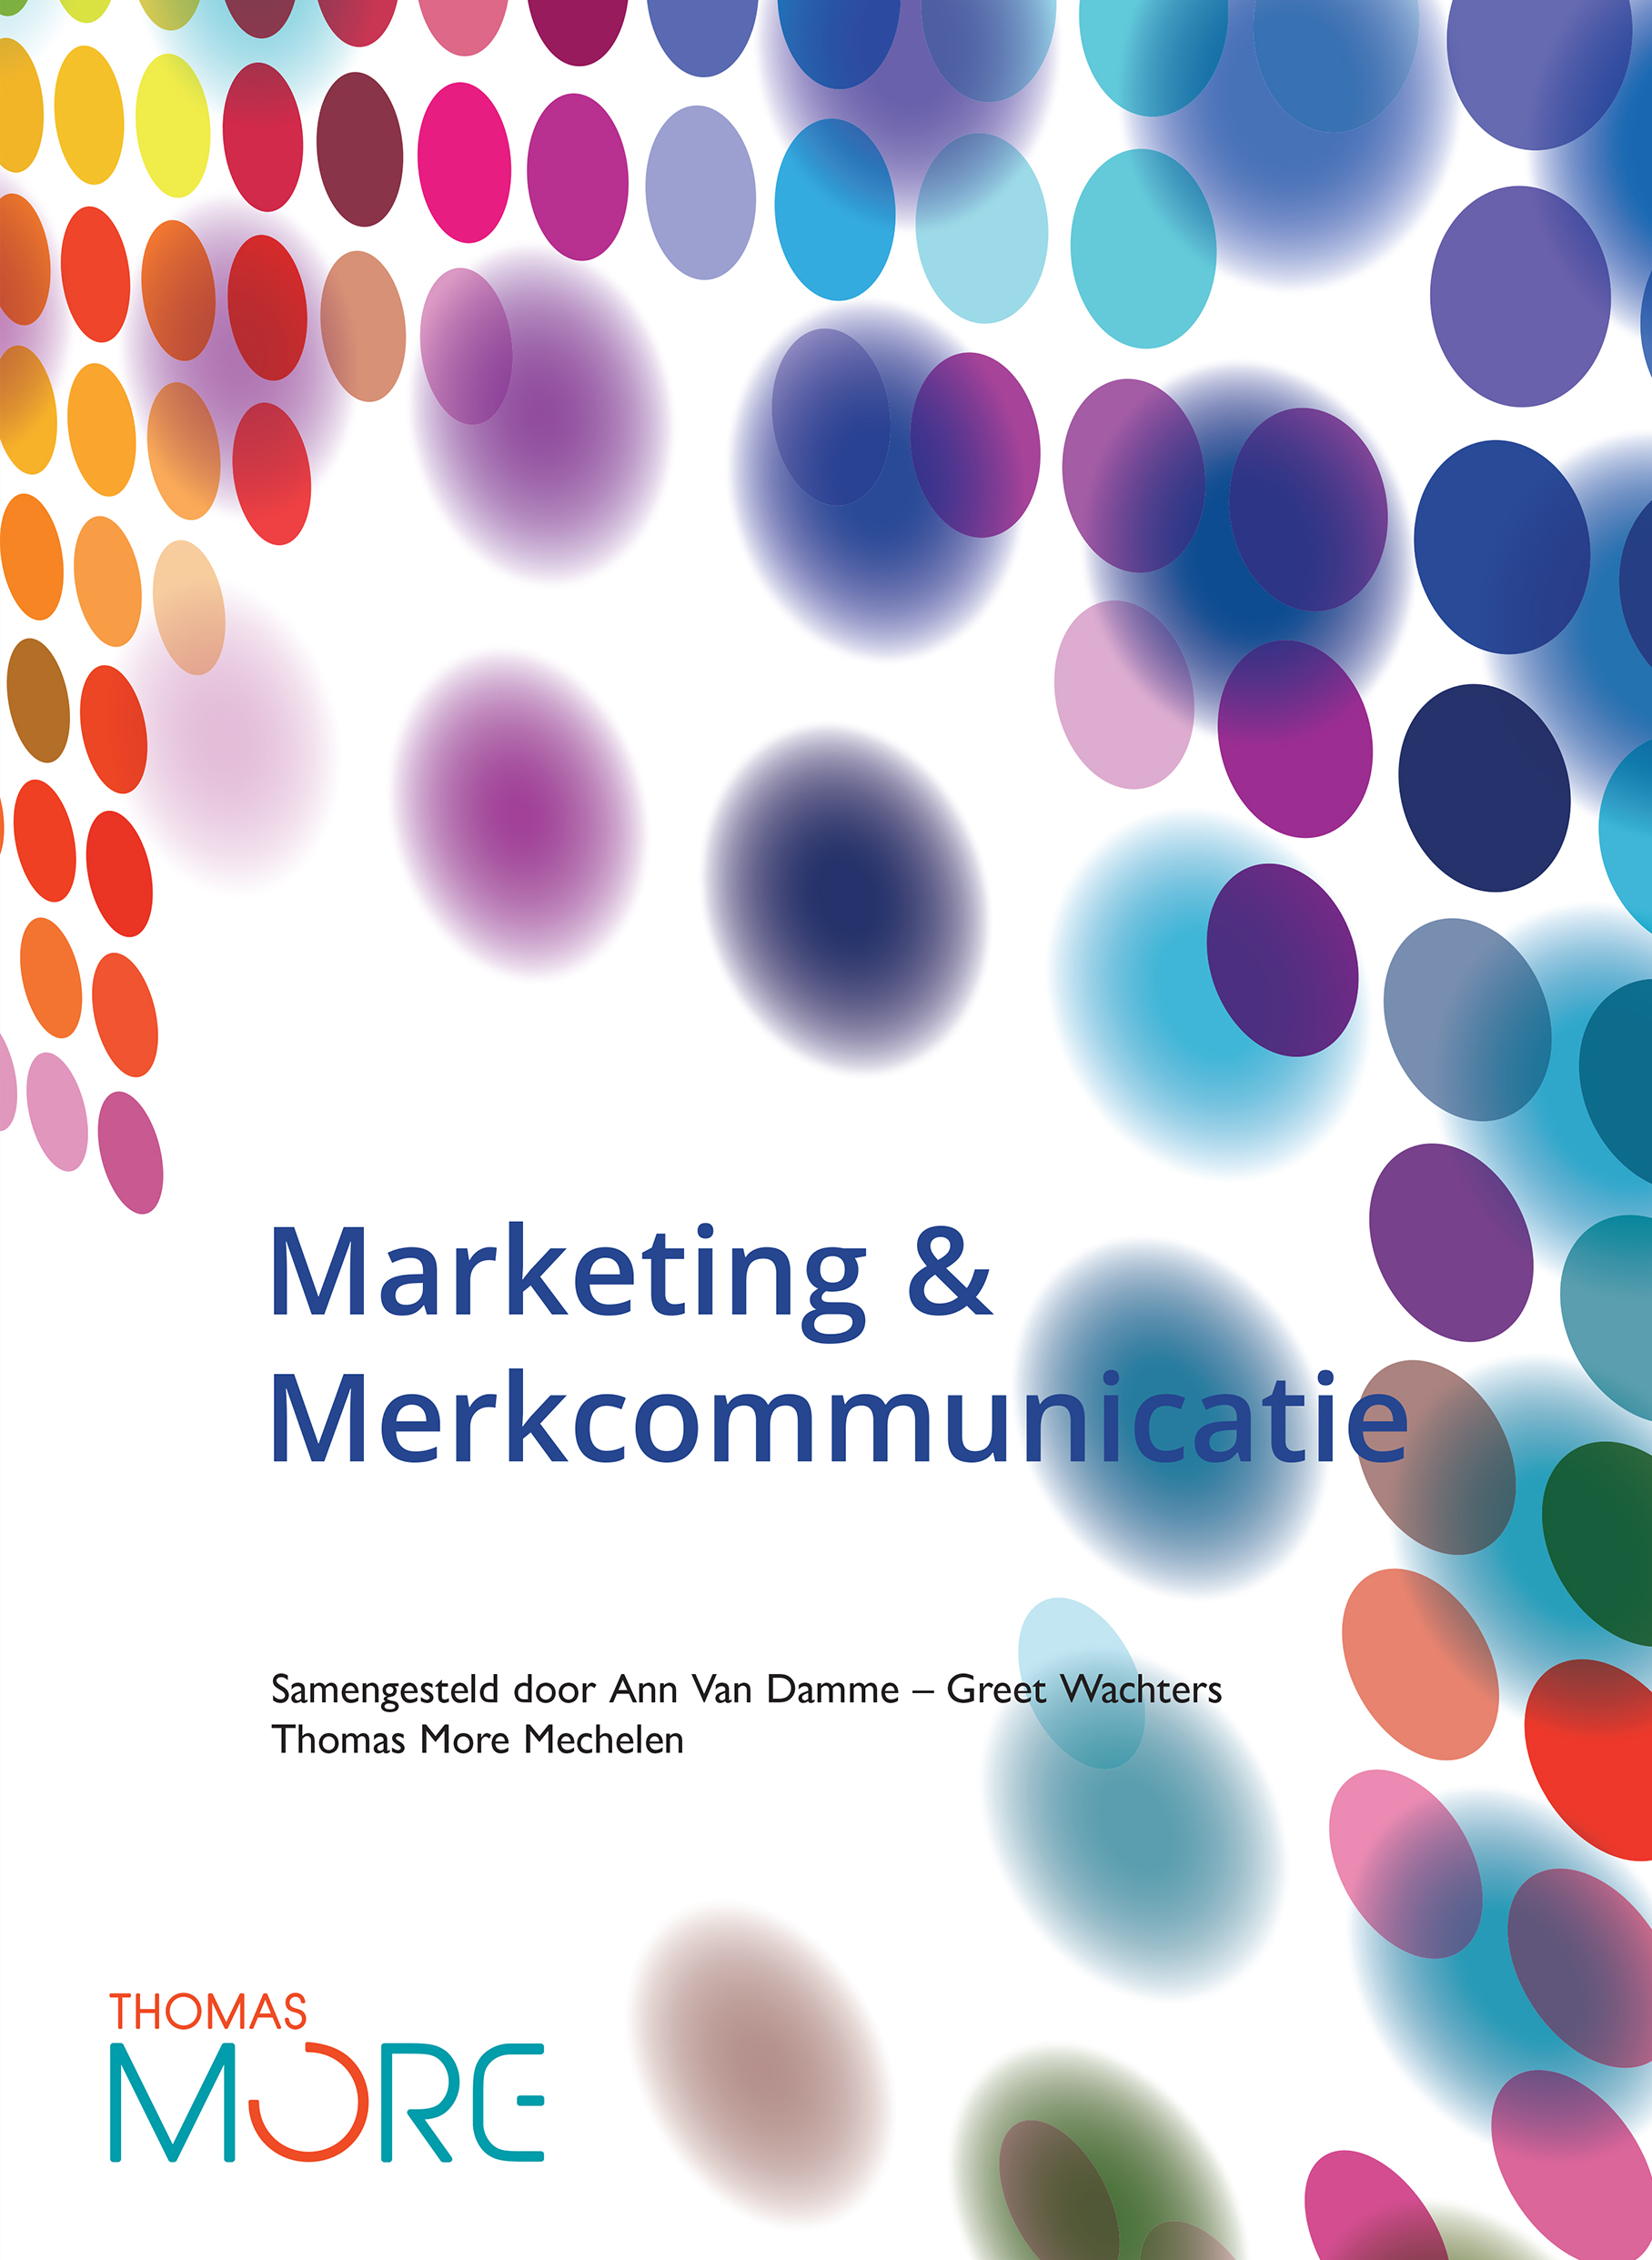 Marketing & Merkcommunicatie